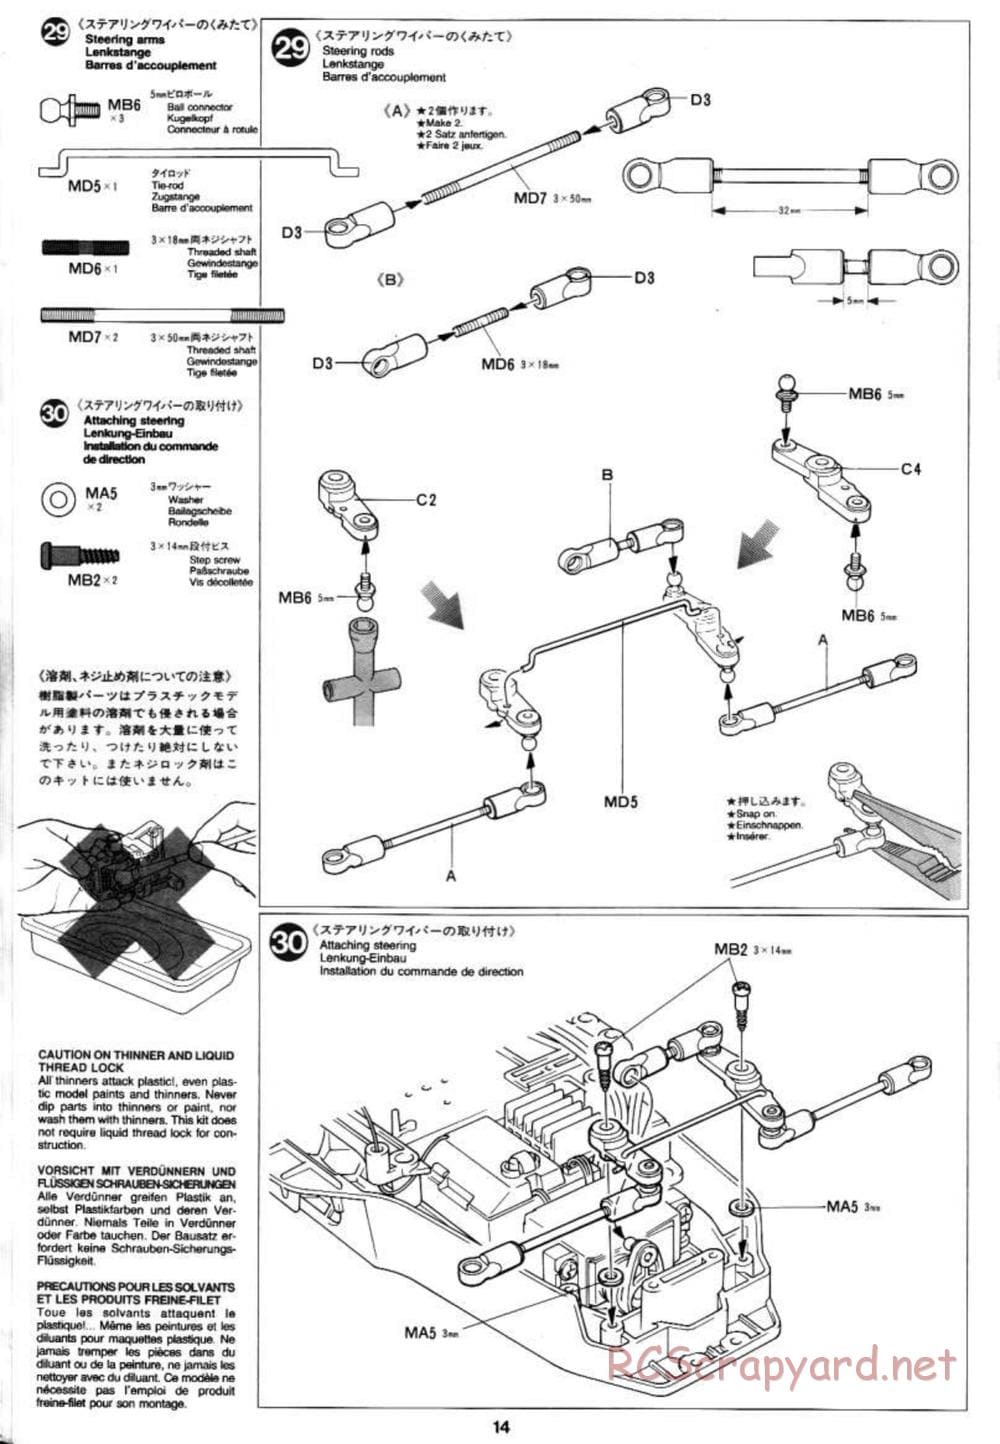 Tamiya - Blazing Star Chassis - Manual - Page 14